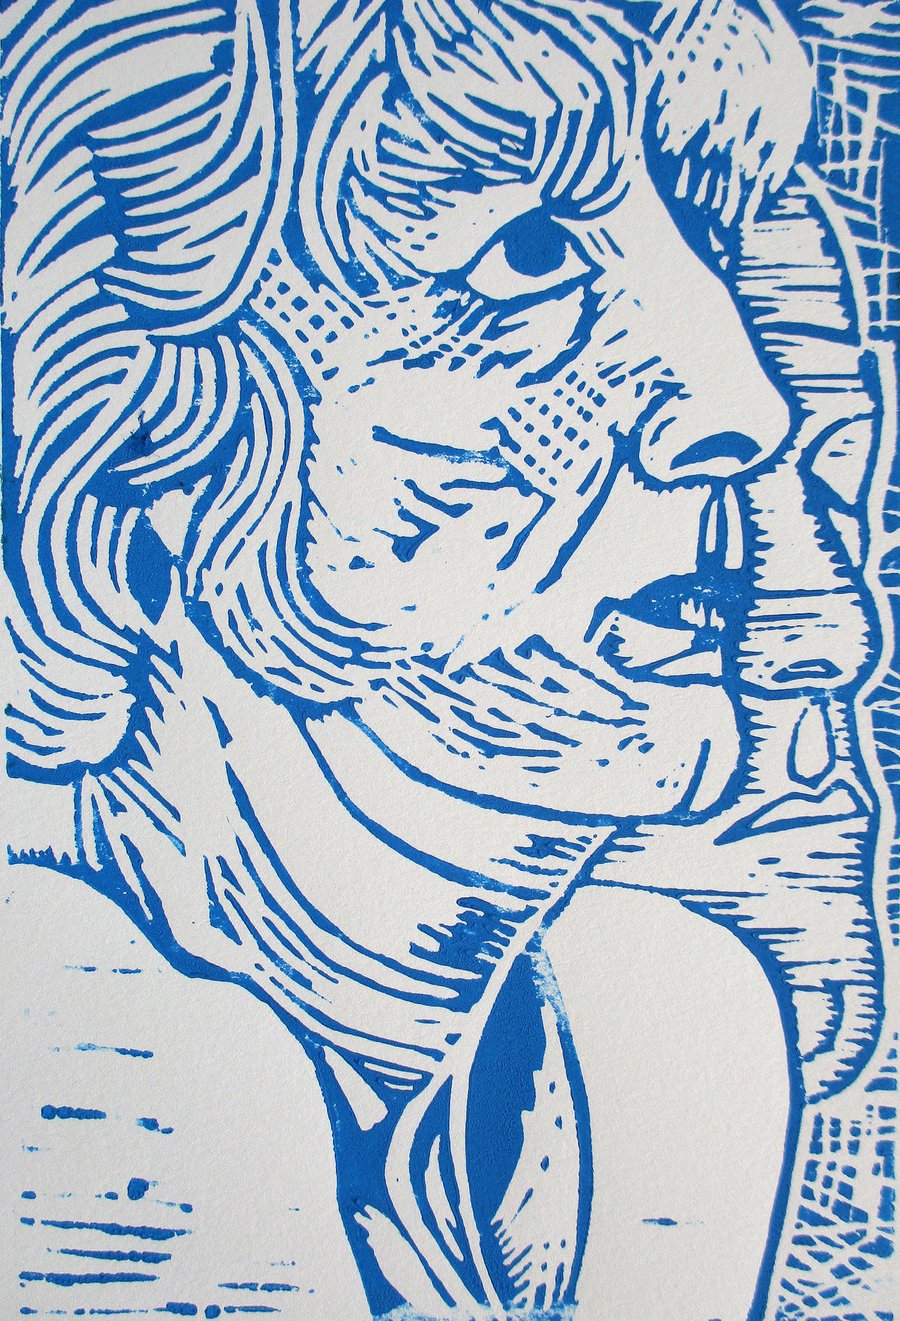 Portrait of Elizabeth Frink Original Hand Pressed Linocut Print Limited Edition